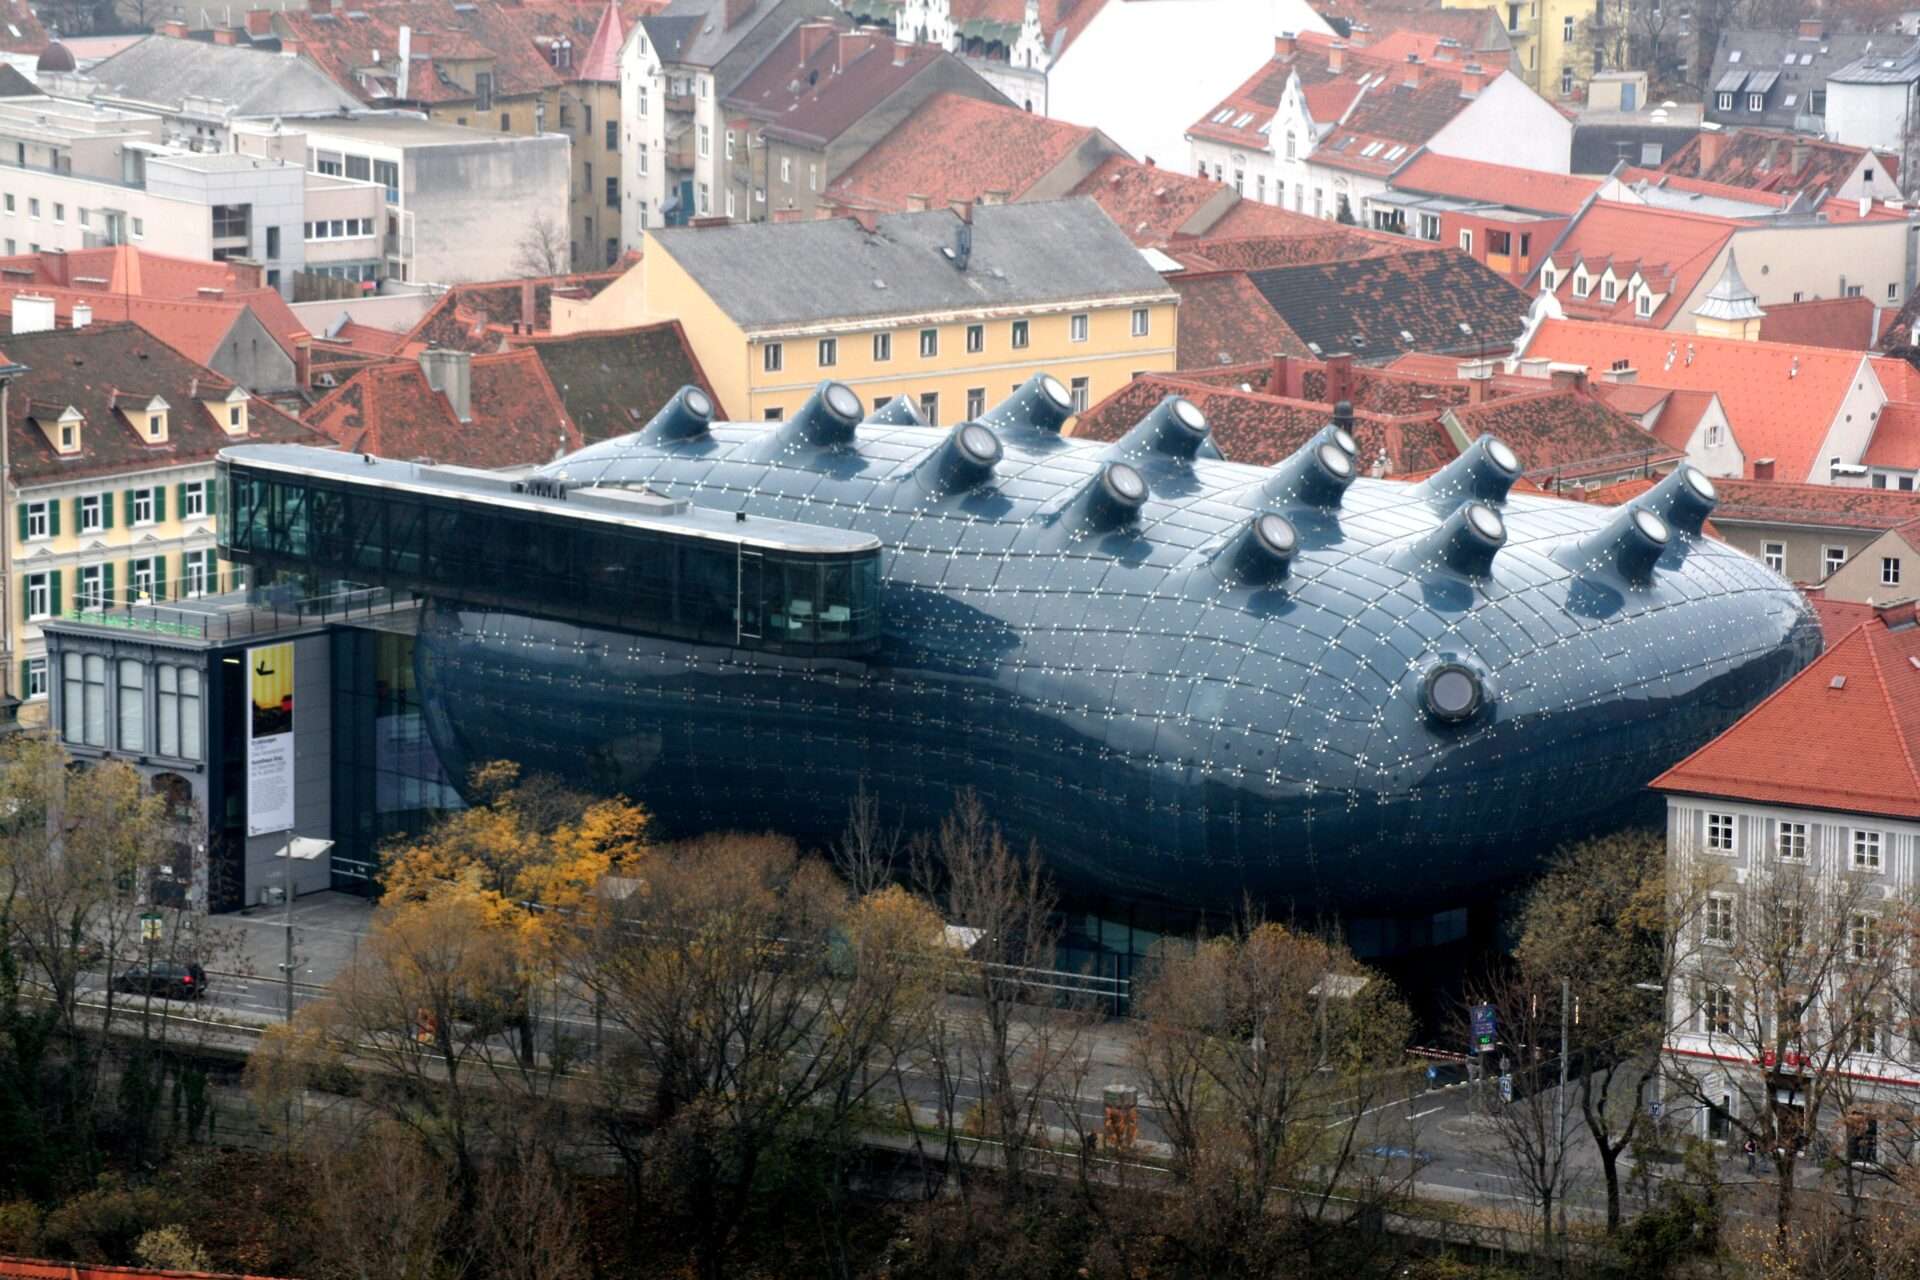 Modern architectural design methods for international museums